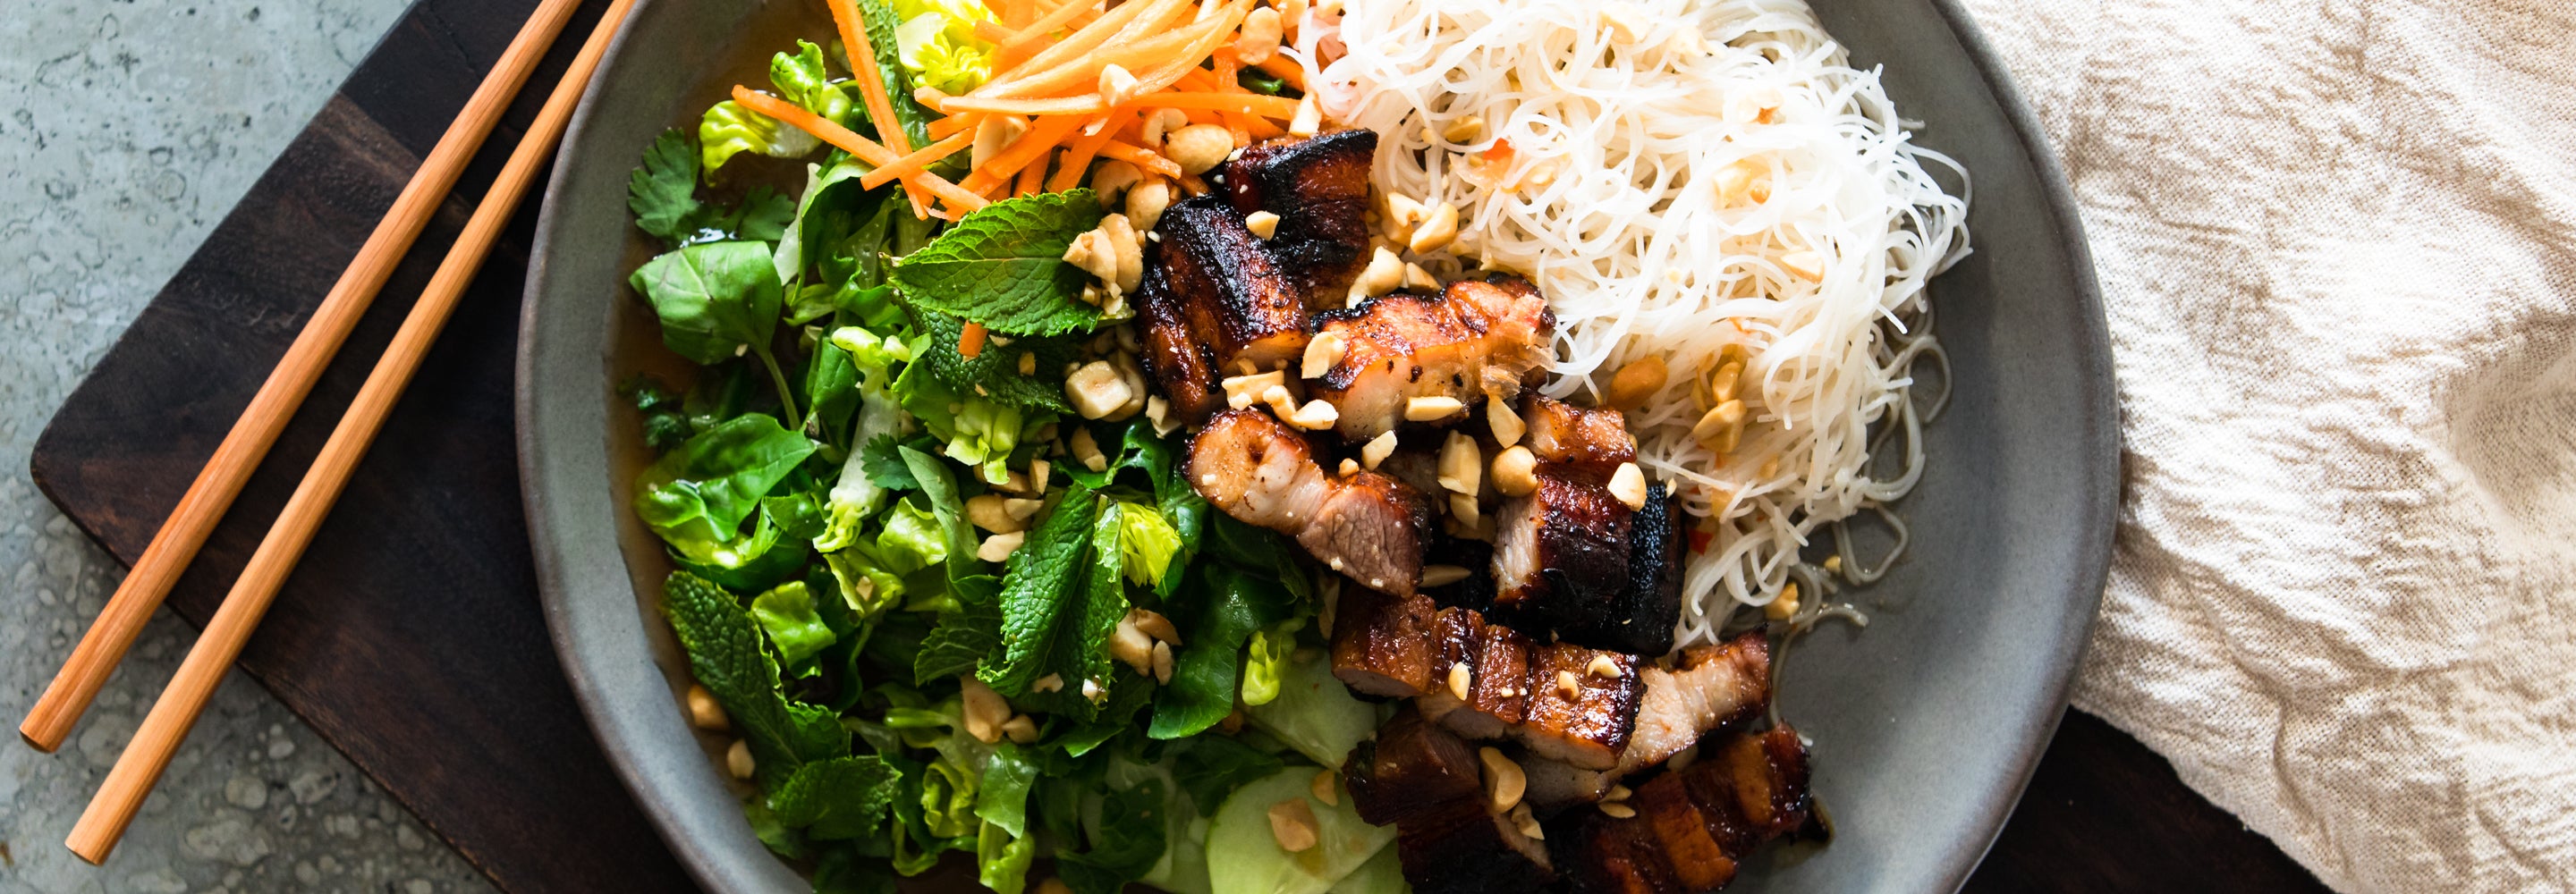 Bun Cha Hanoi Recipe | Roccbox Recipes | Gozney